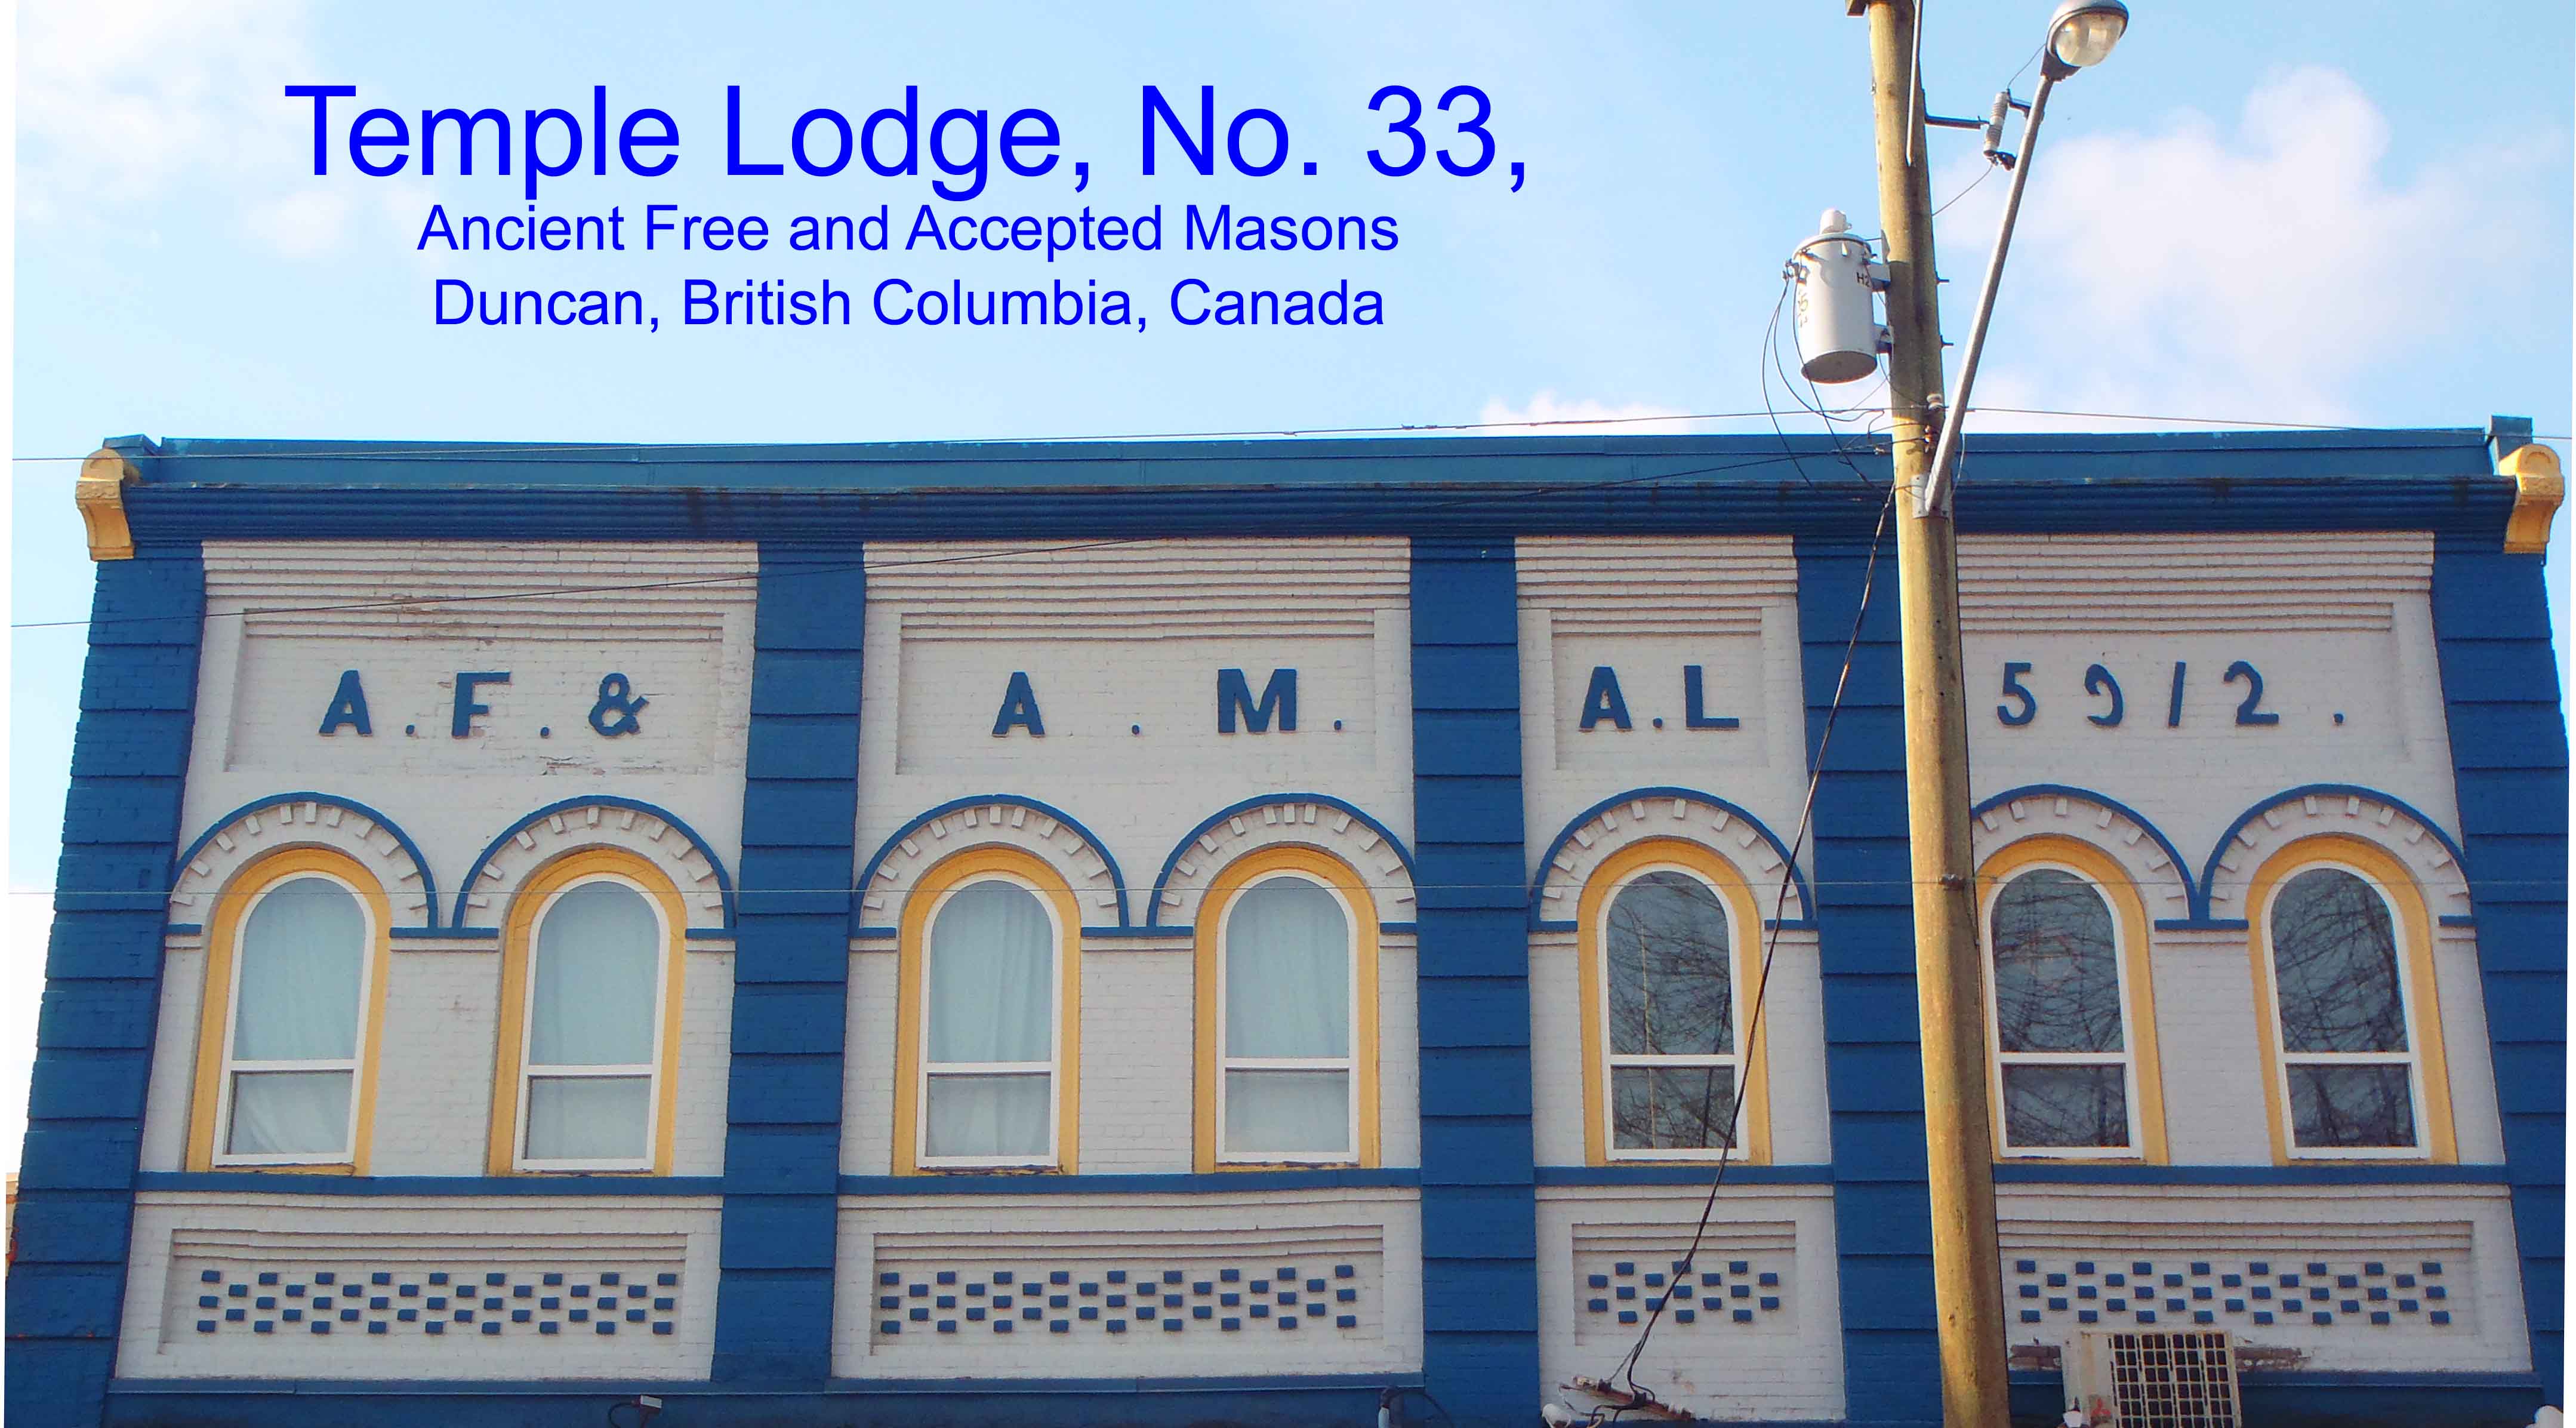 Masonic Temple, Duncan, B.C. and Temple Lodge header